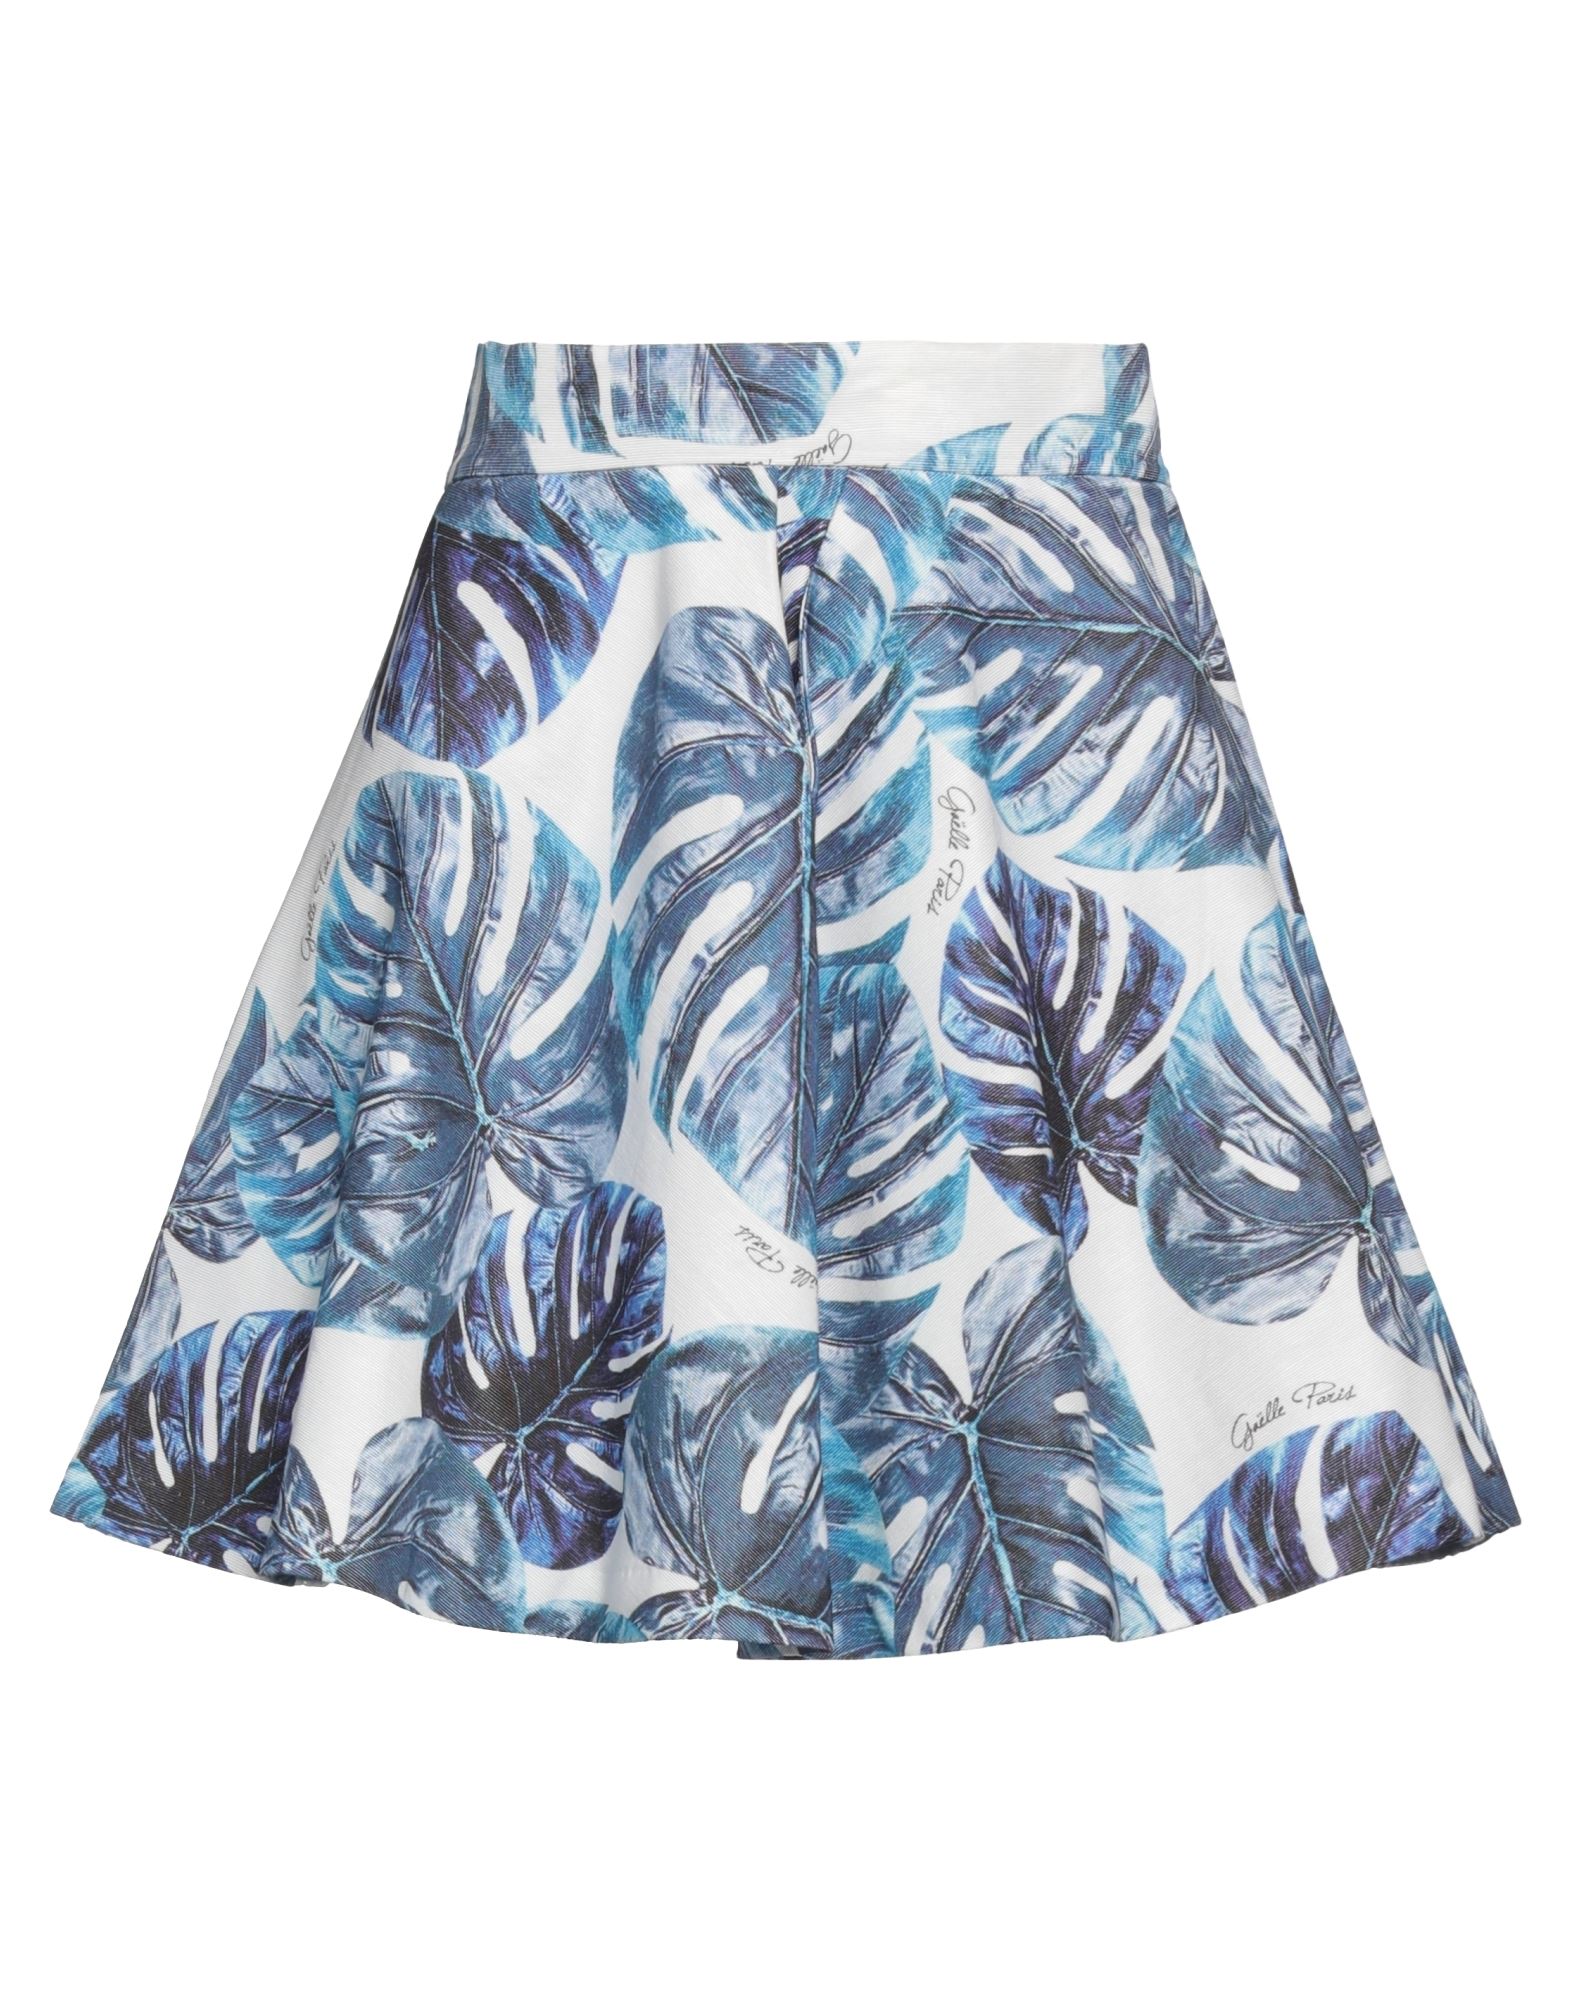 Gaelle Paris Mini Skirts In Blue